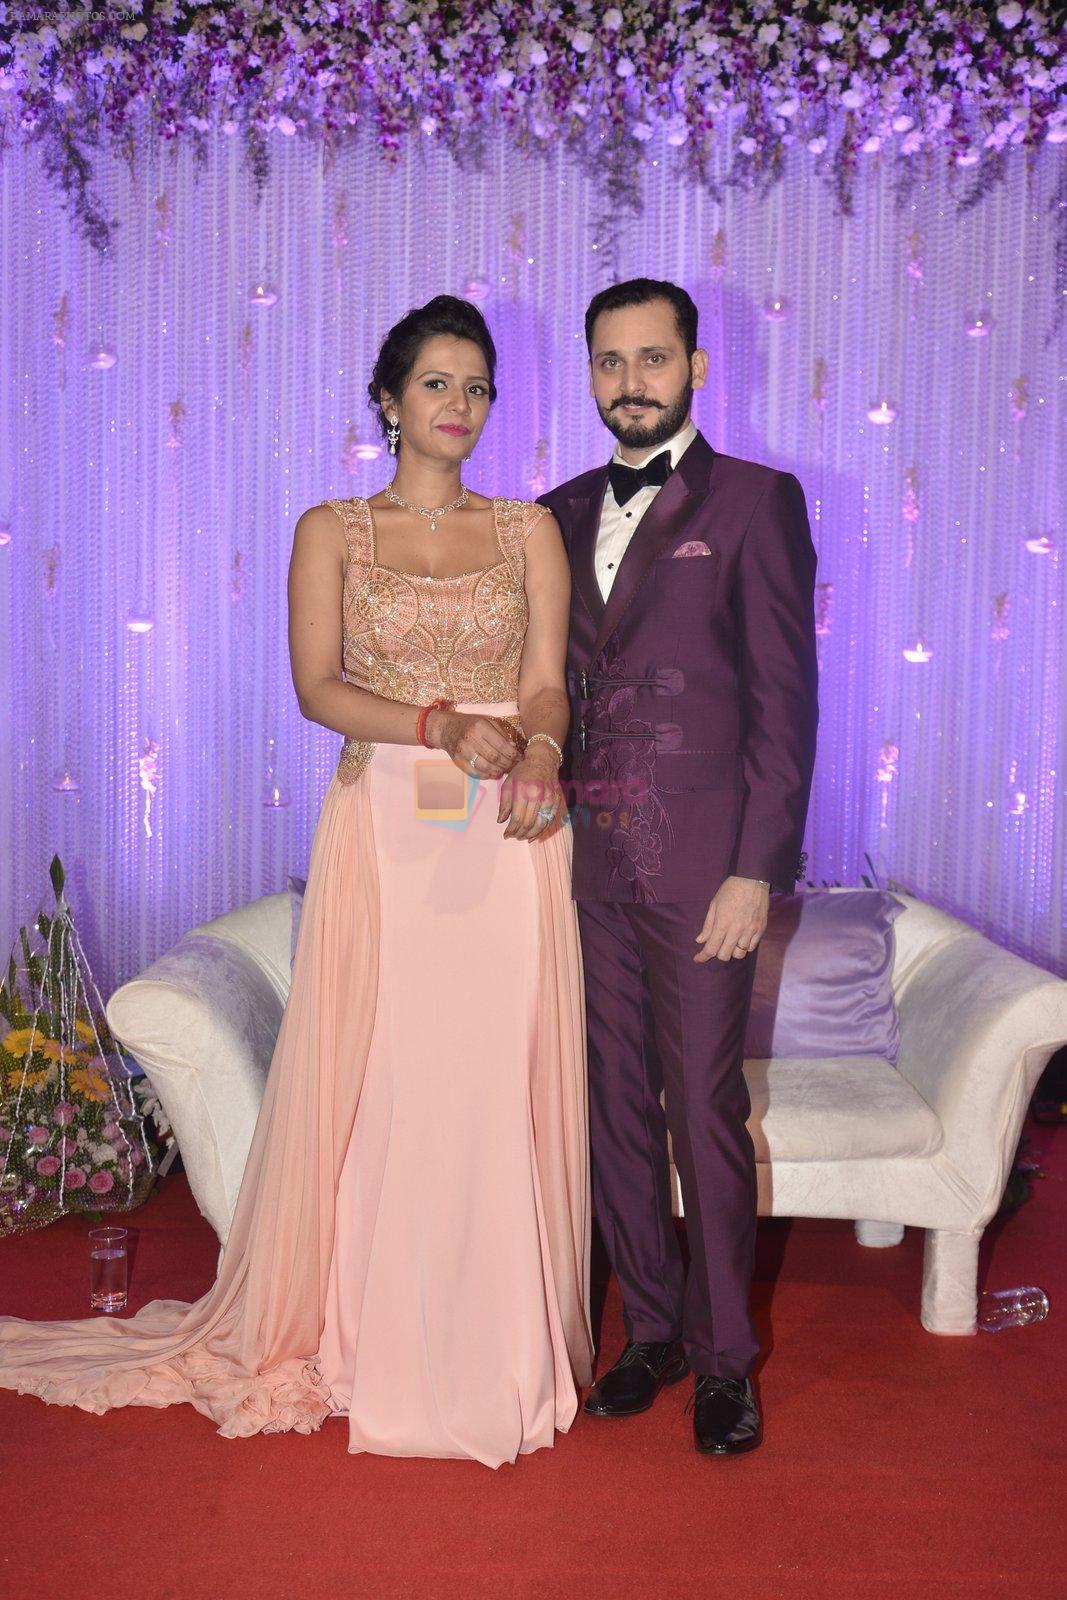 at Dipankar Zalpuri and Sweta Bhatt's wedding reception on 5th March 2016